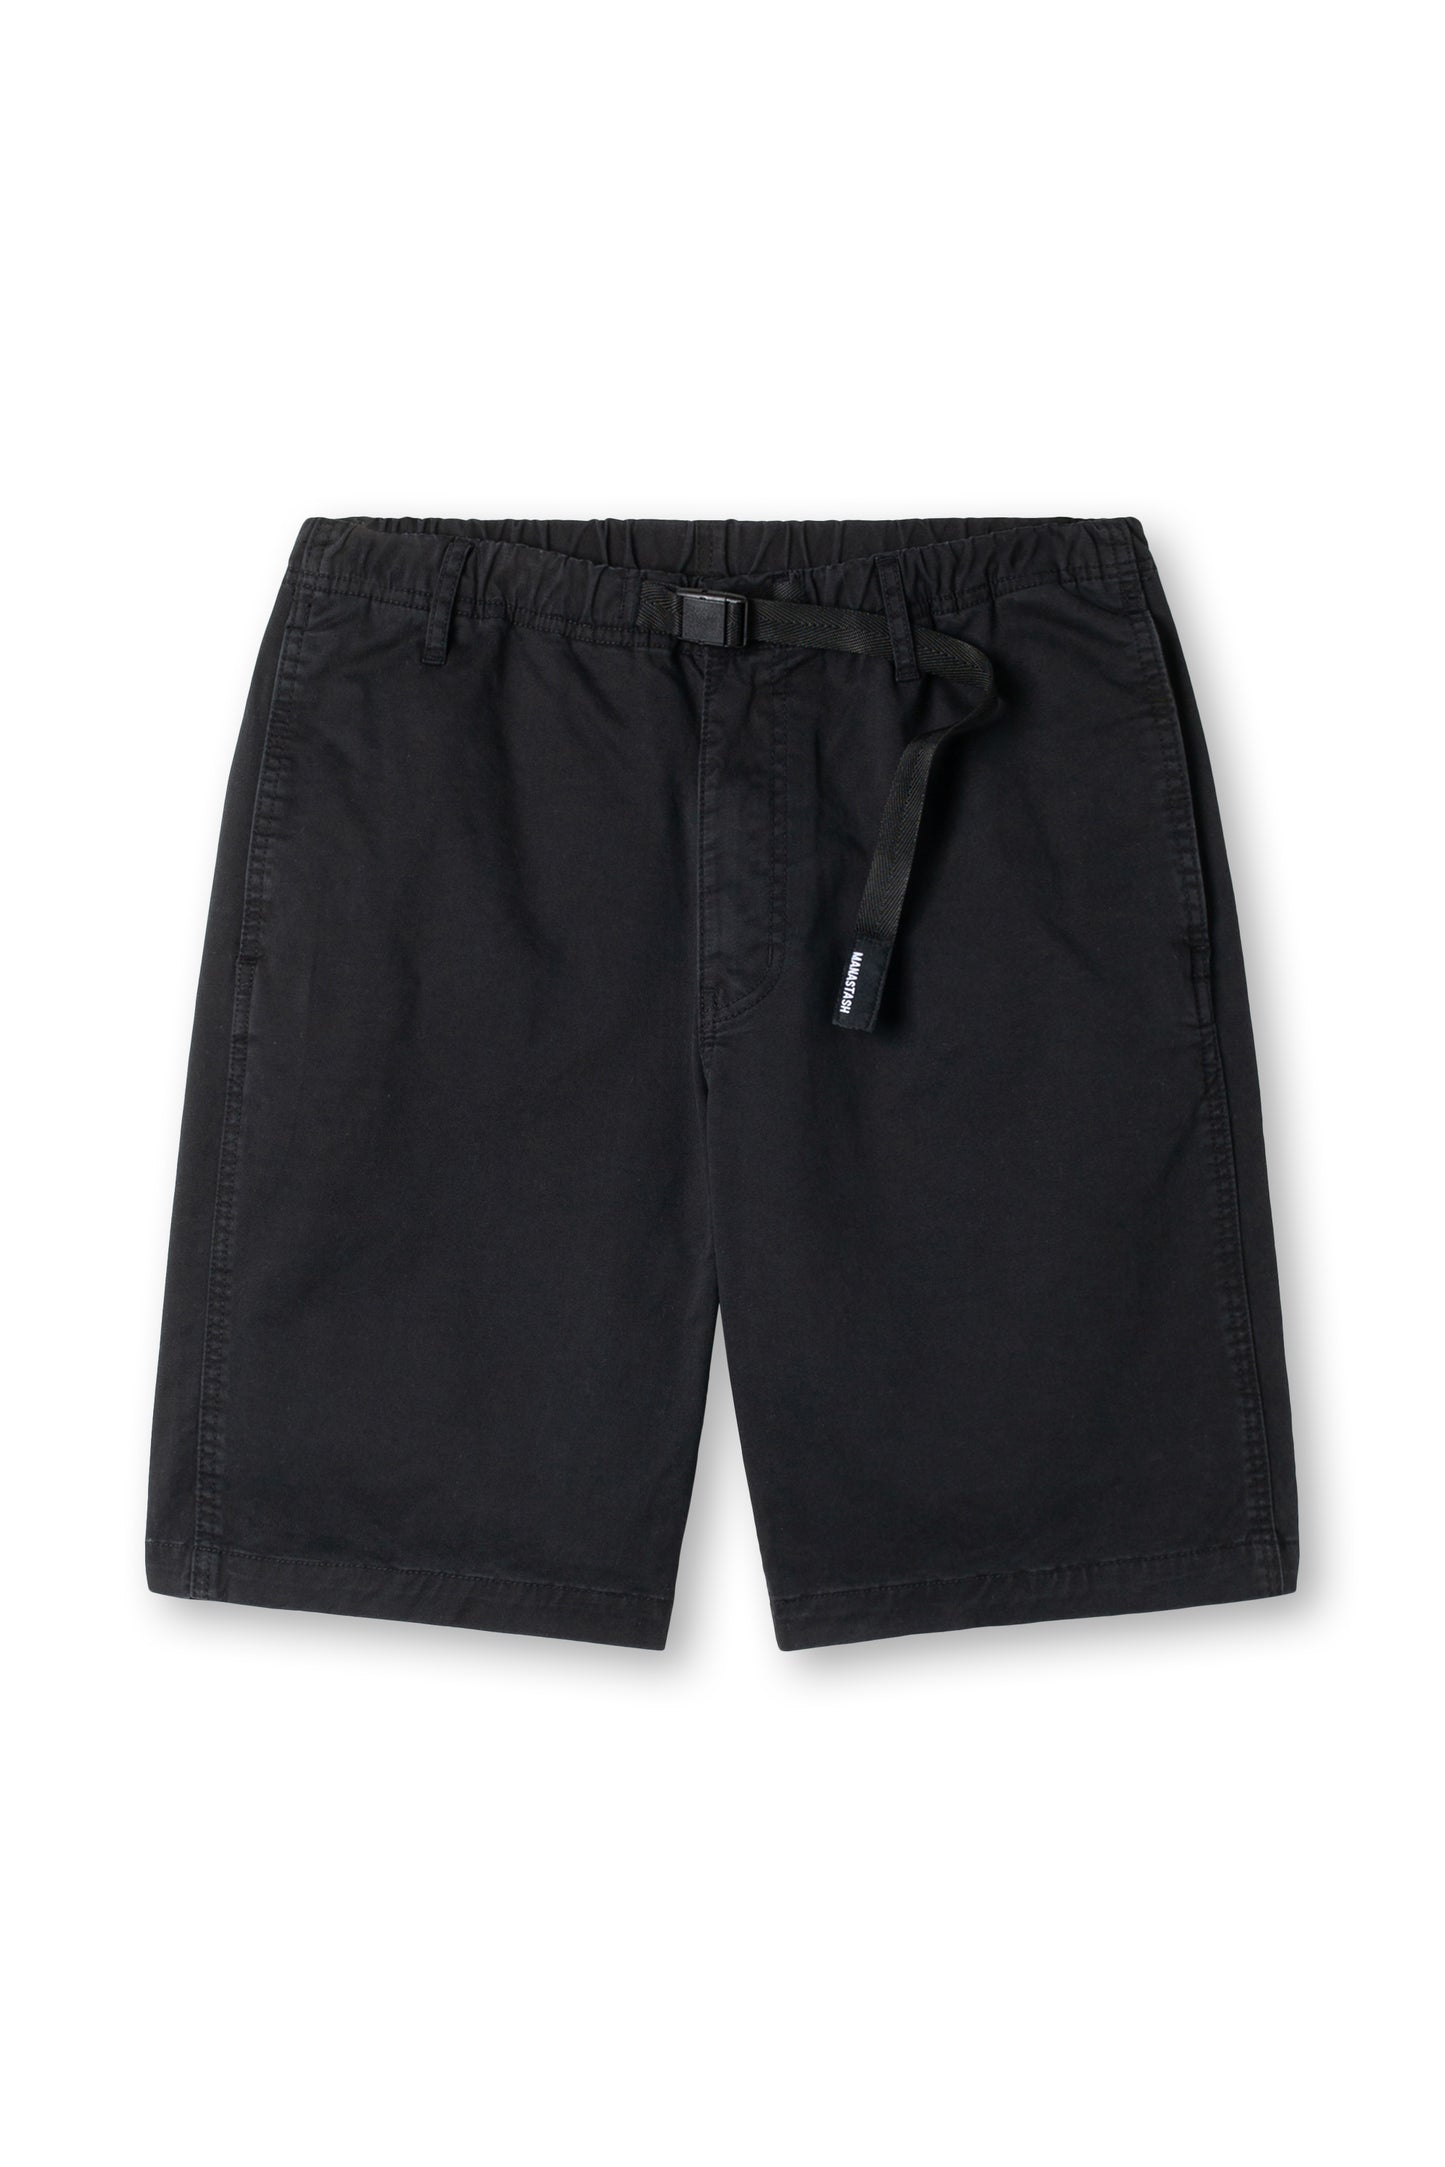 Flex Climber Shorts (Black)